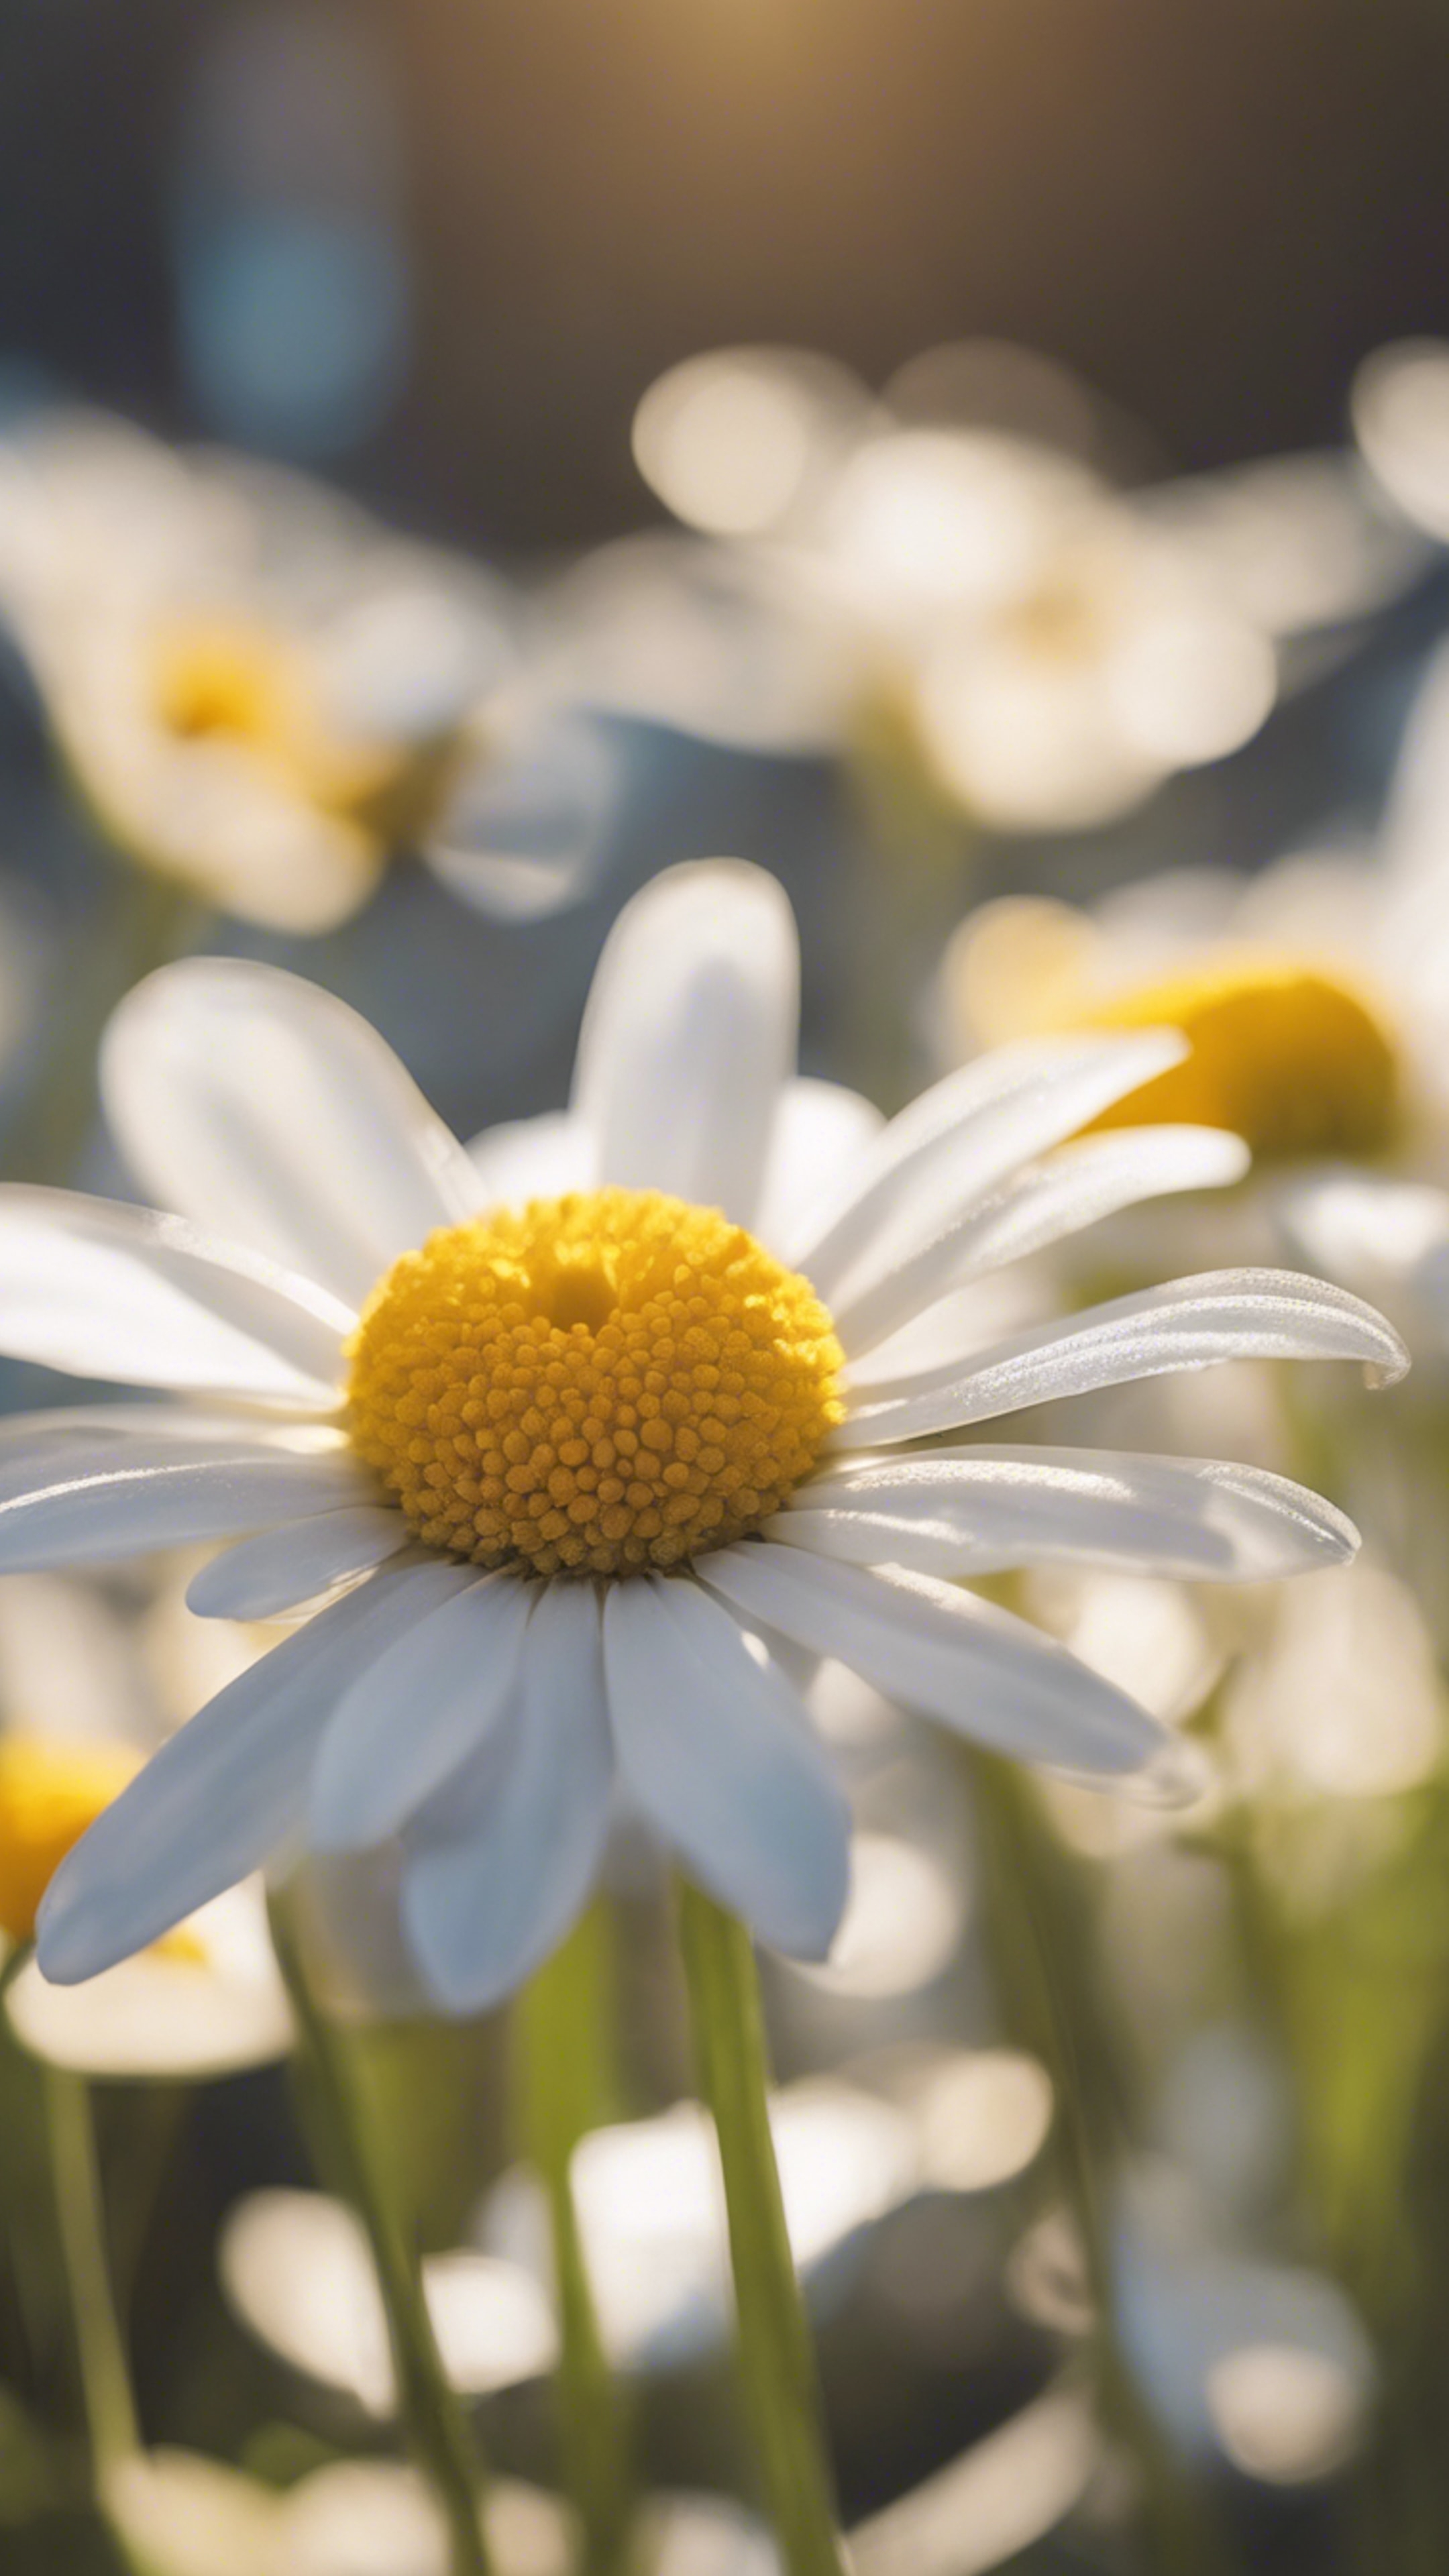 A single daisy with bright yellow center and white petals in the sunlit morning. Wallpaper[38fa296f7e504f5c9ea0]